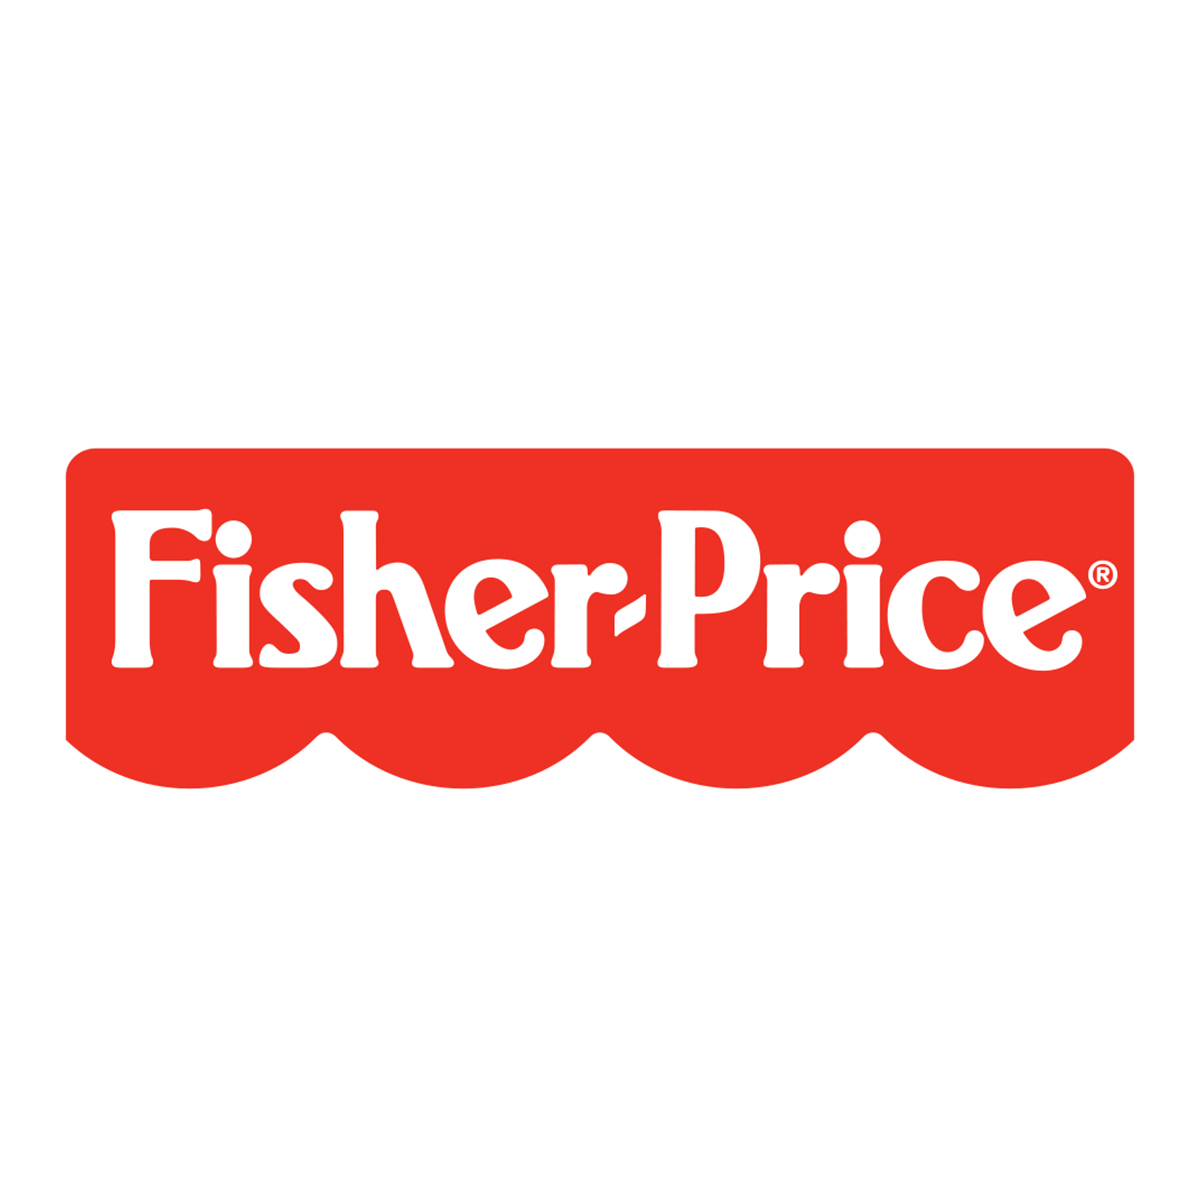 Fisher Price.jpg